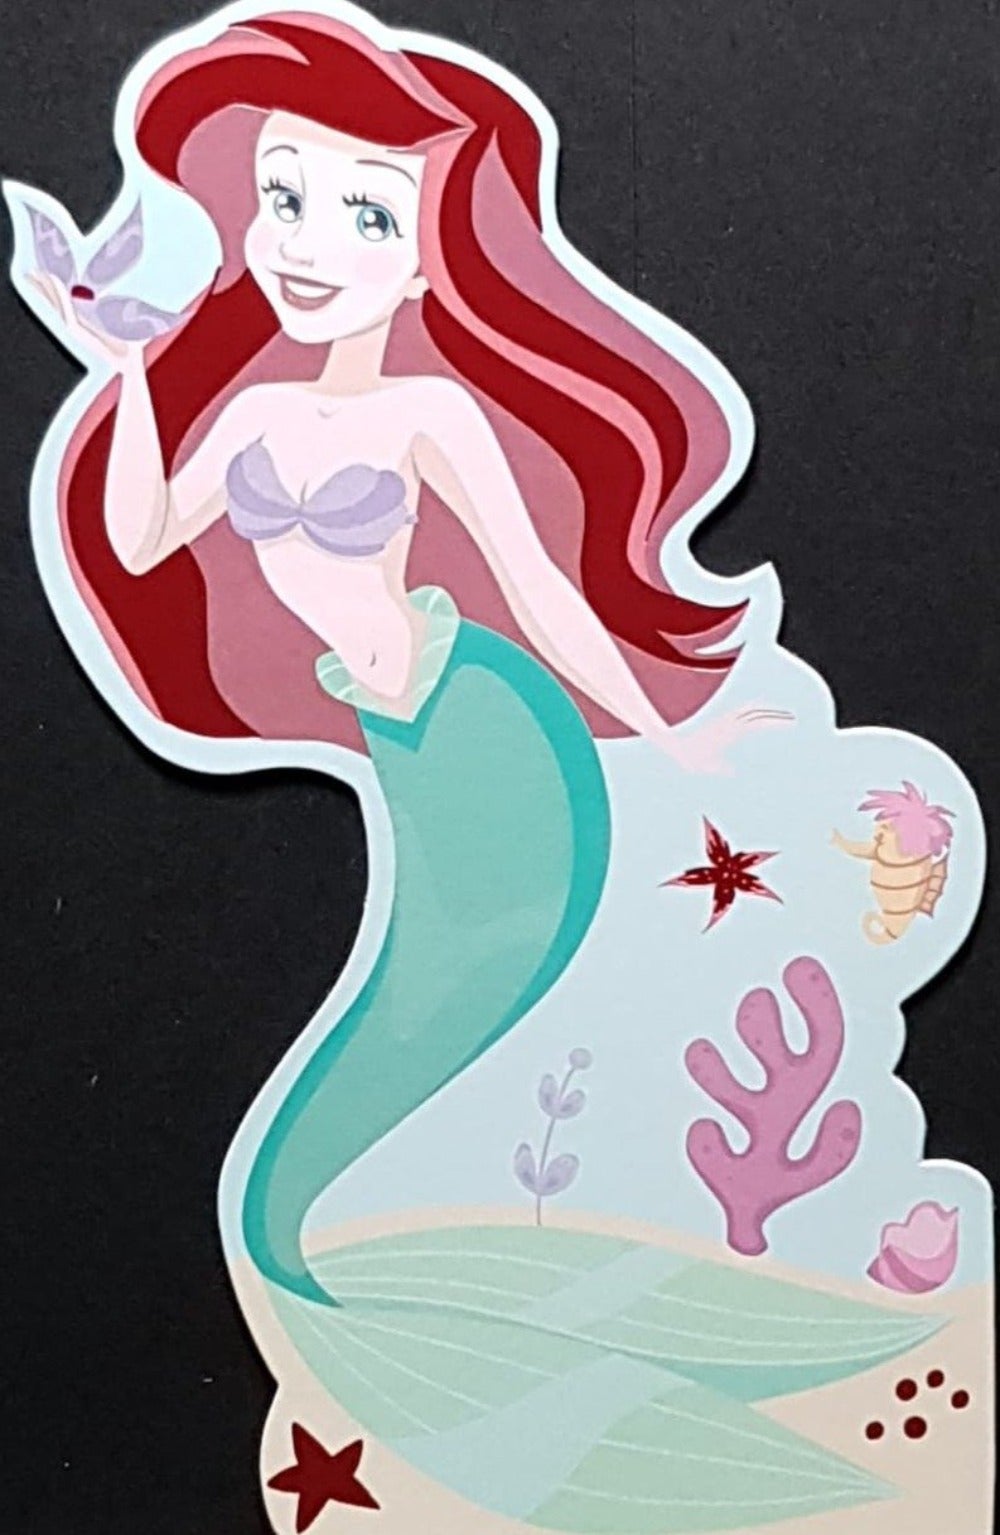 Blank Card - A Pretty Mermaid In A Sea (Shaped)